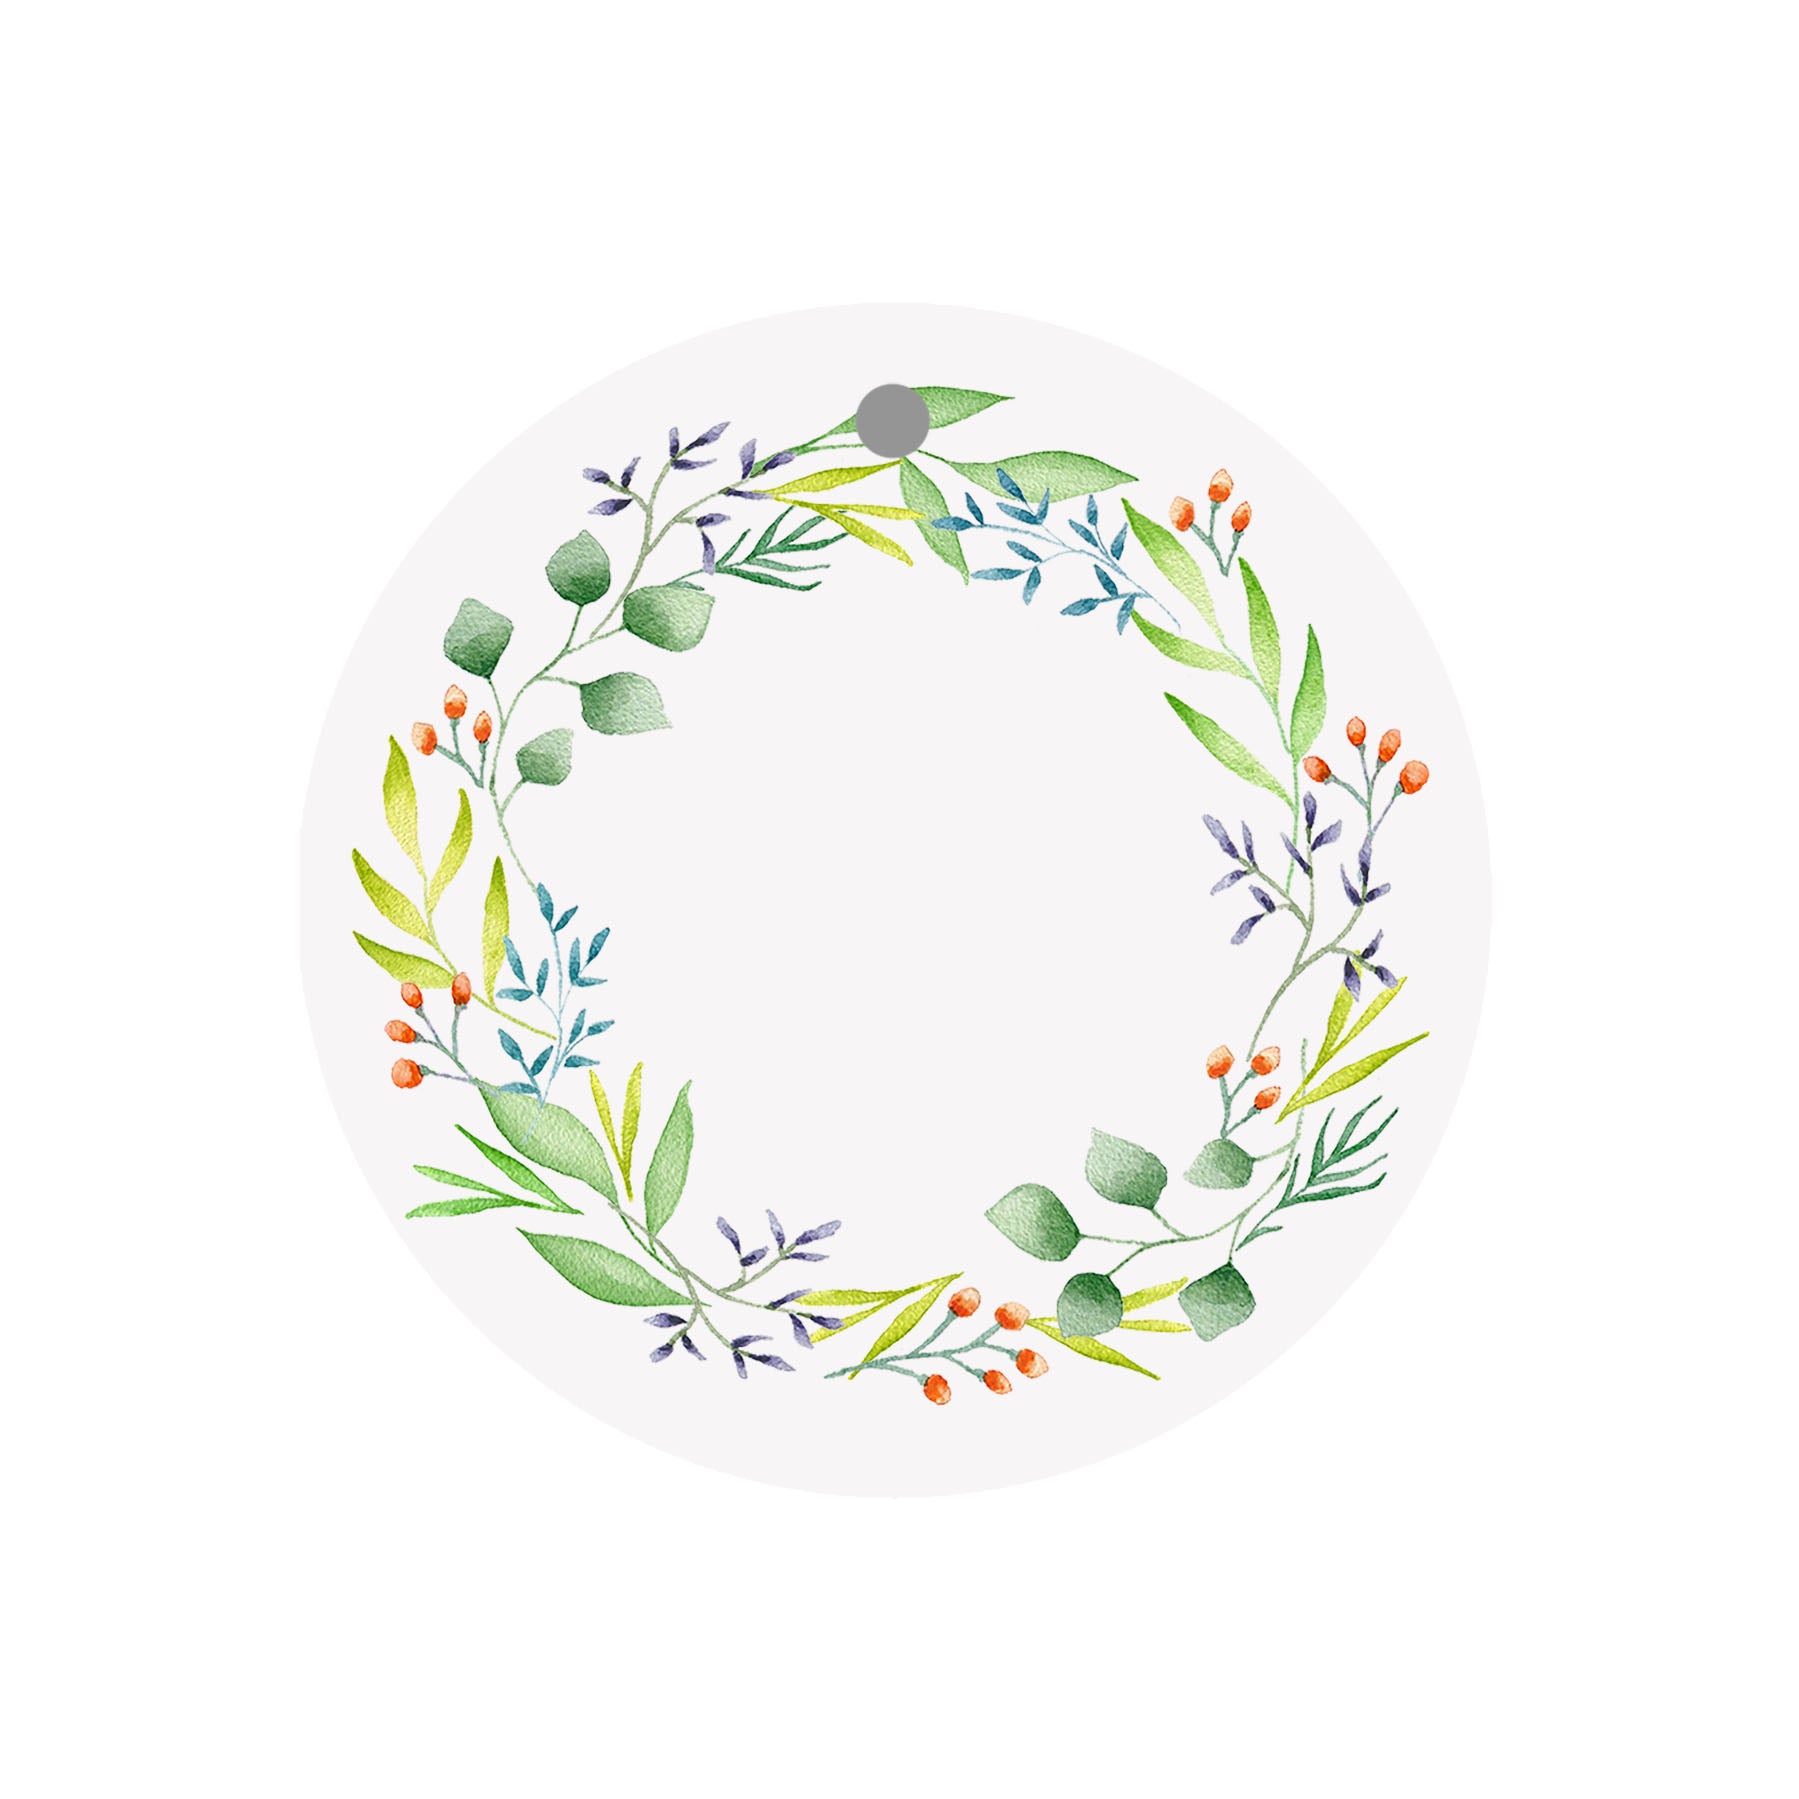 Foliage Wreath Circular Round Gift Tags